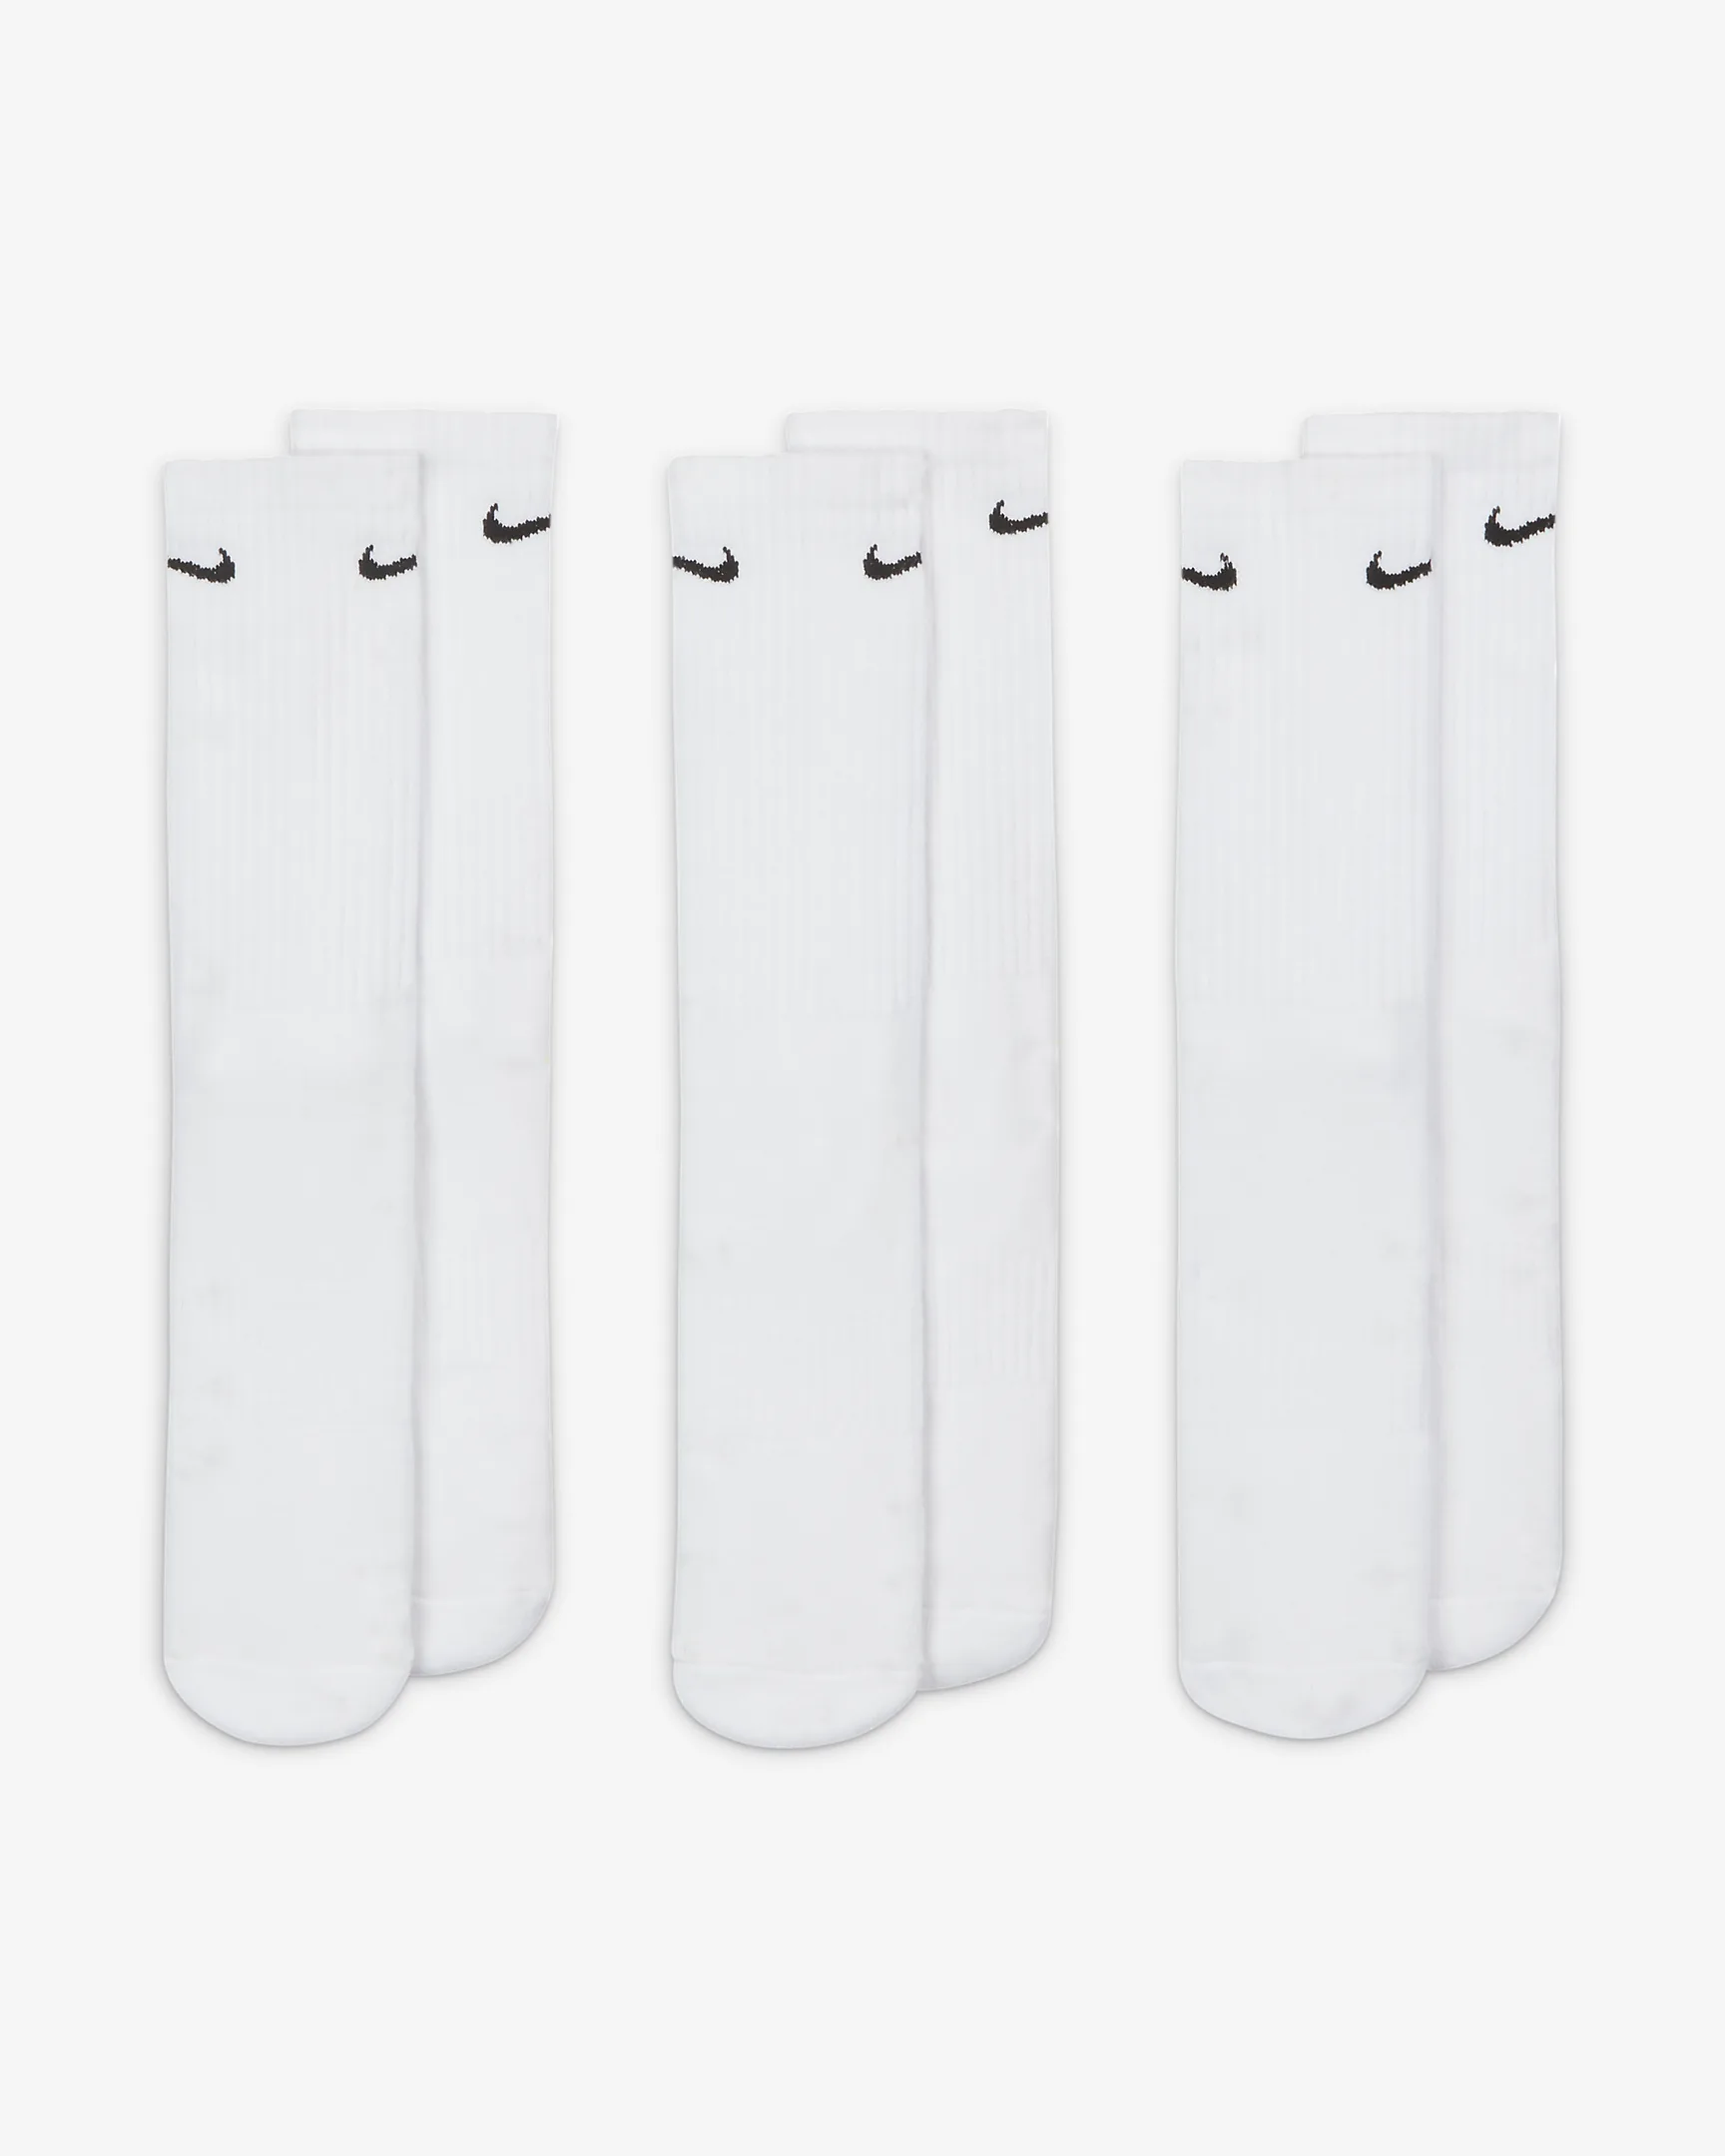 Nike 3-Pack Everyday Cushioned Socken